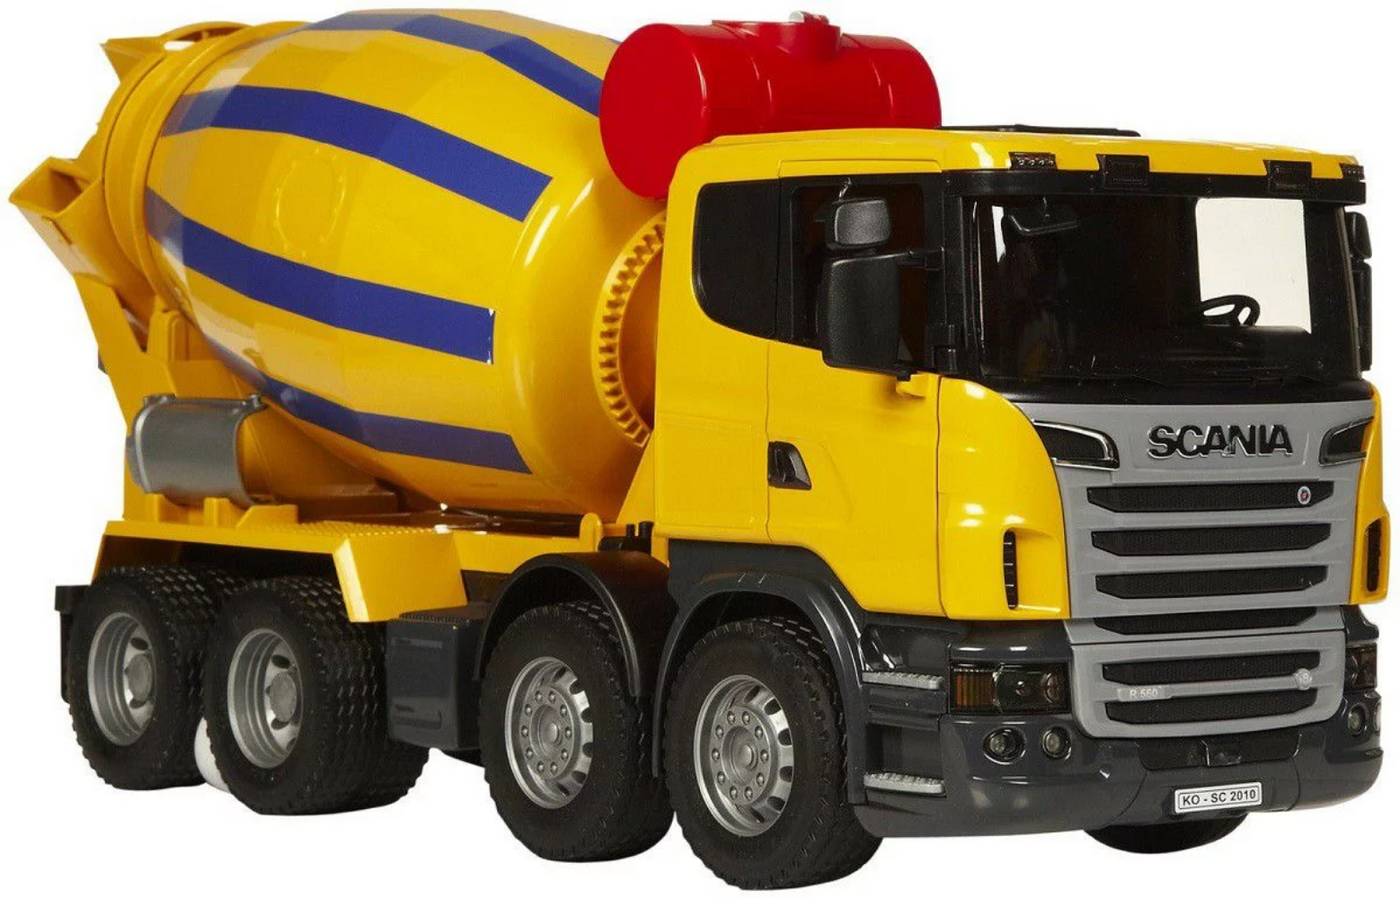 toy concrete mixer truck